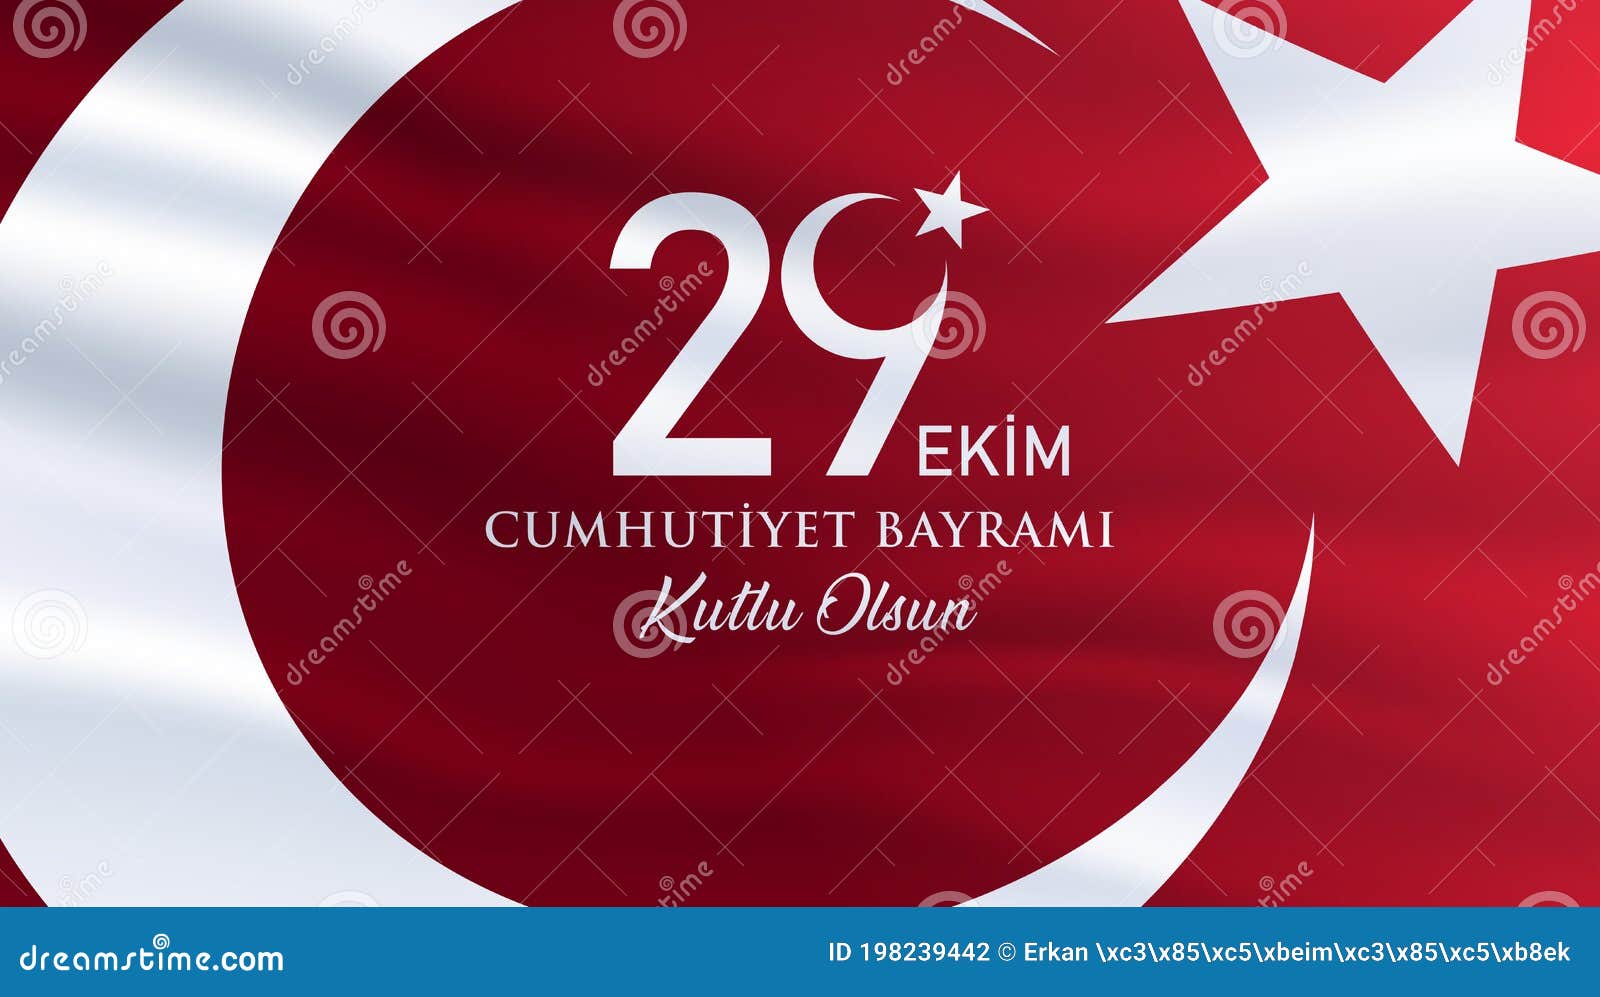 29 ekim cumhuriyet bayrami kutlu olsun tradução 2 de outubro feliz dia da  república independência da turquia